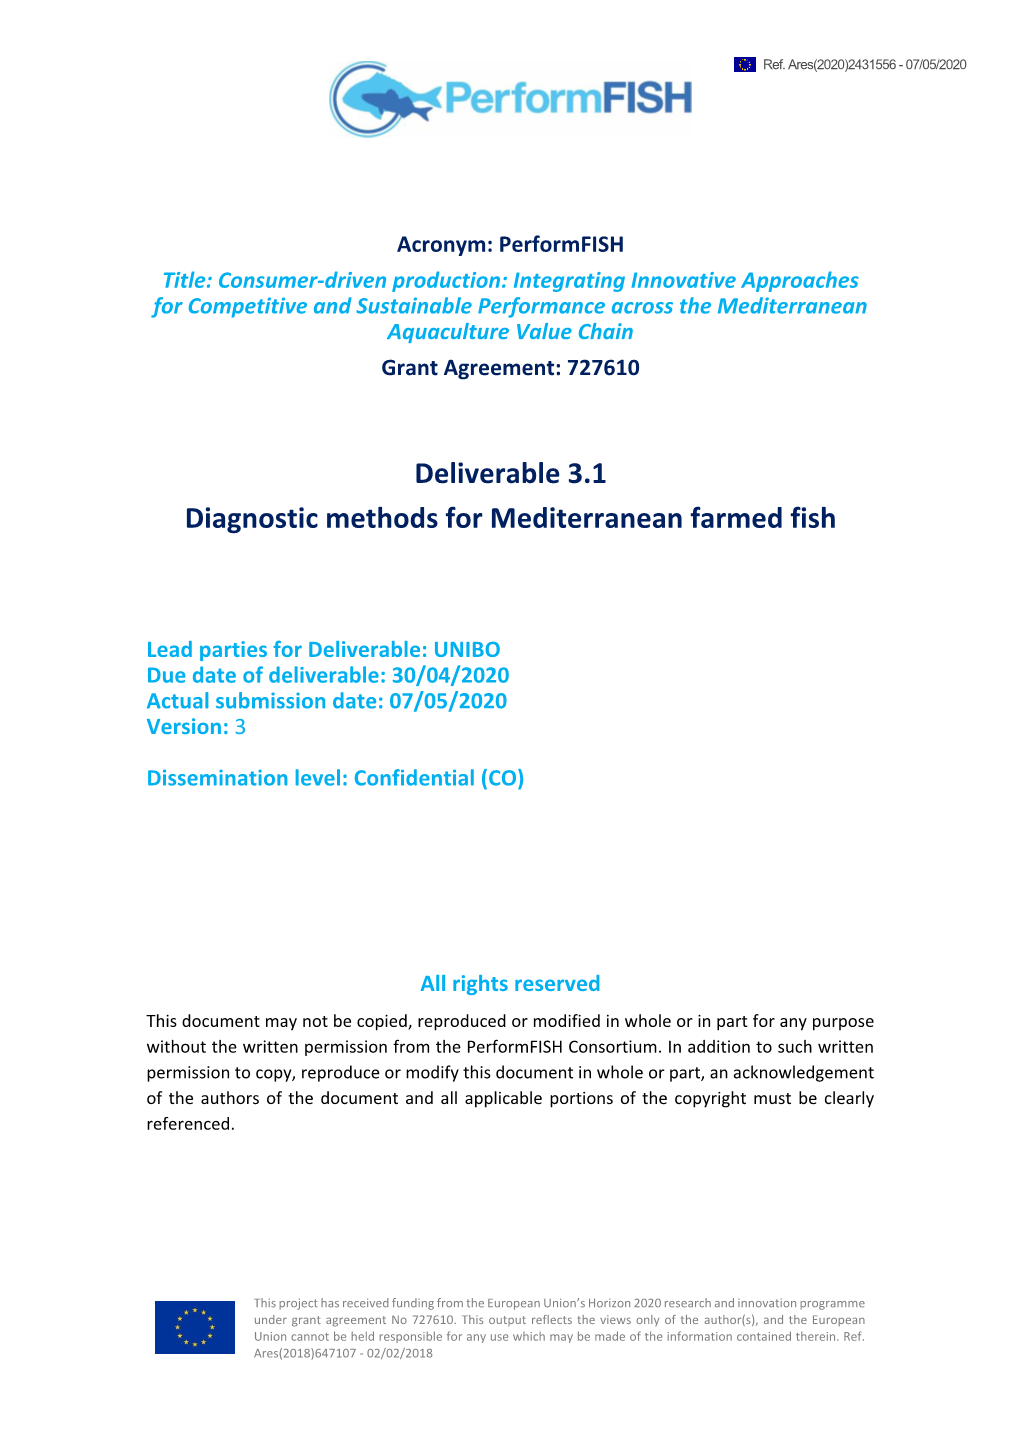 Diagnostic Methods for Mediterranean Farmed Fish